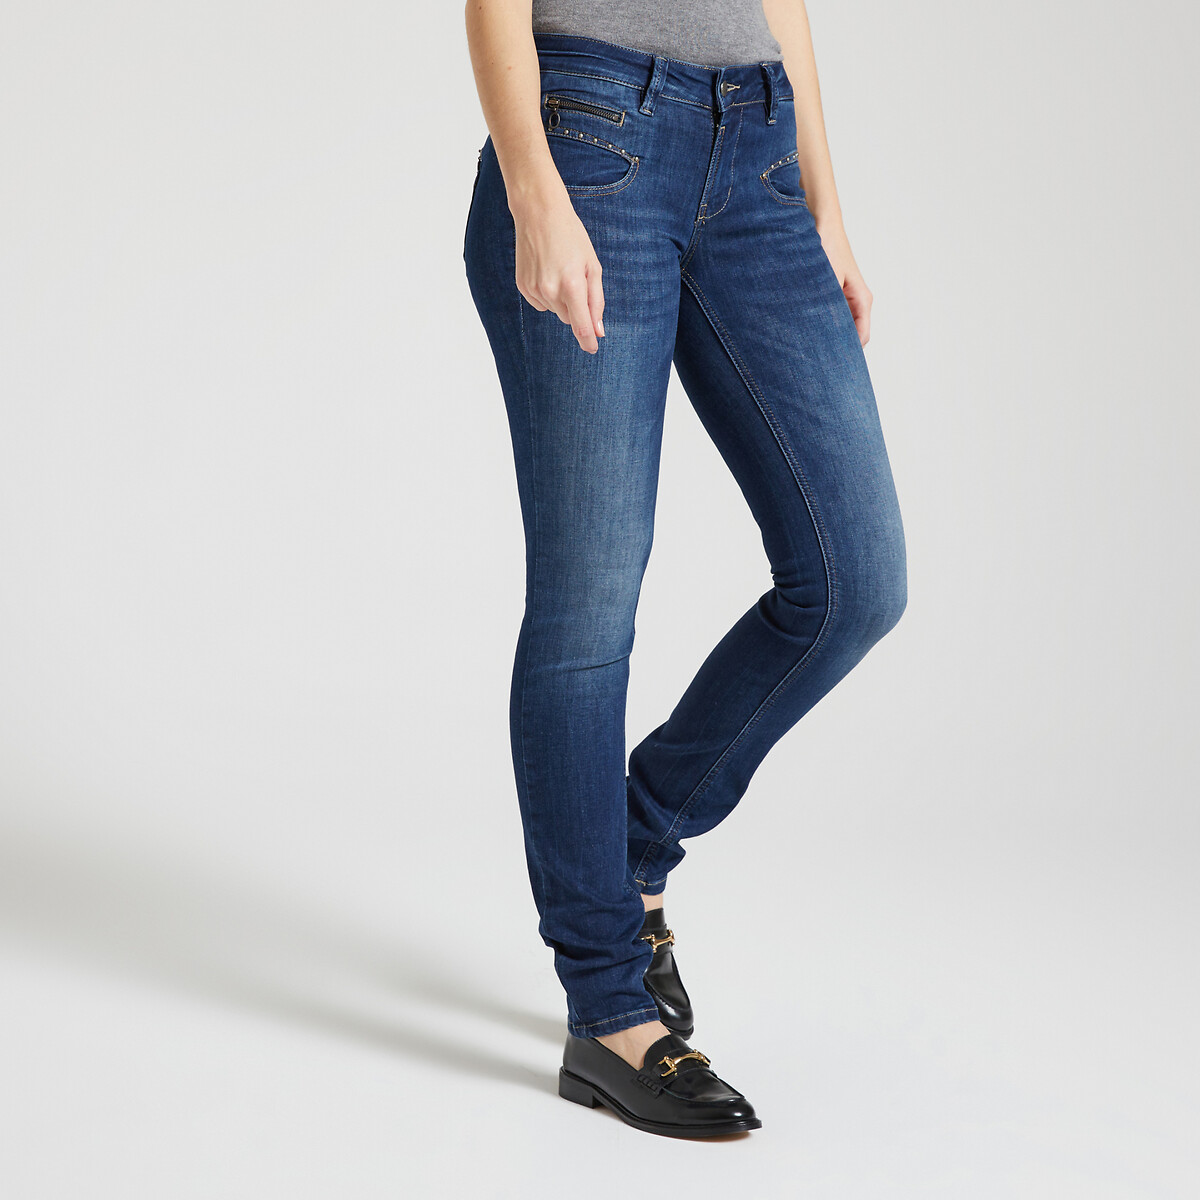 Alexa slim fit | Redoute fever length jeans, Porter 32.5\